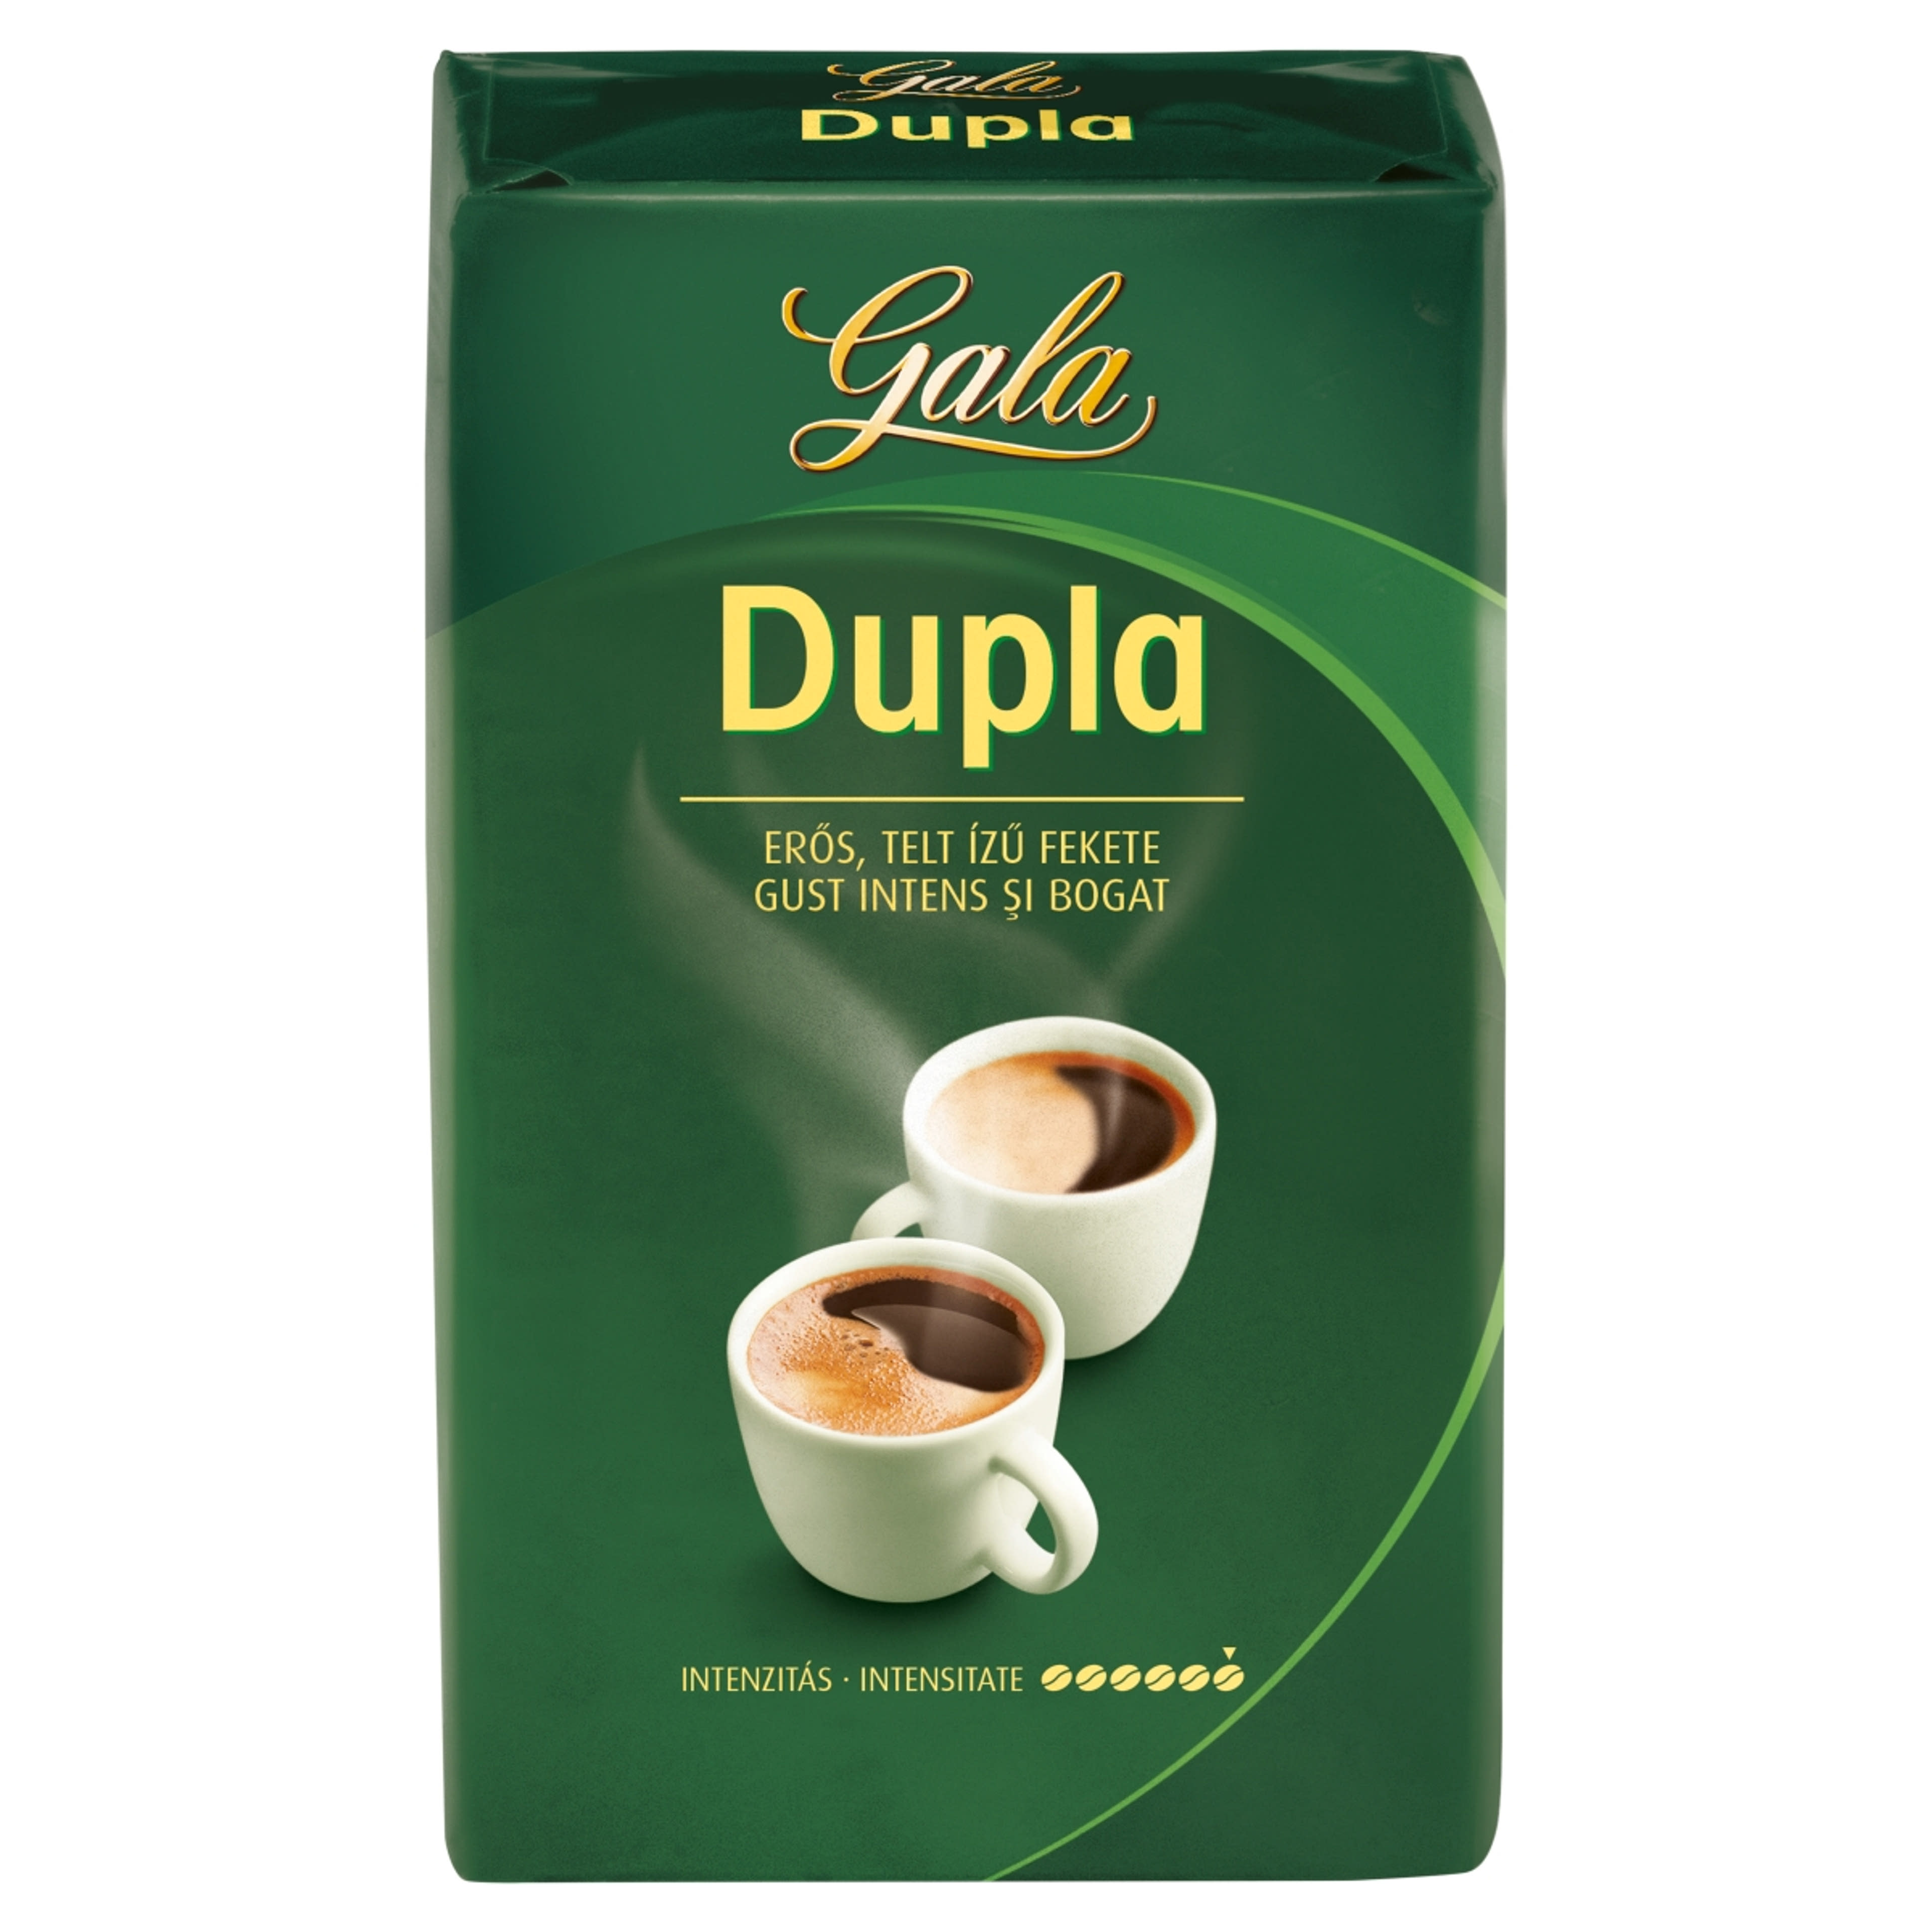 Gala Dupla őrölt kávé - 250 g